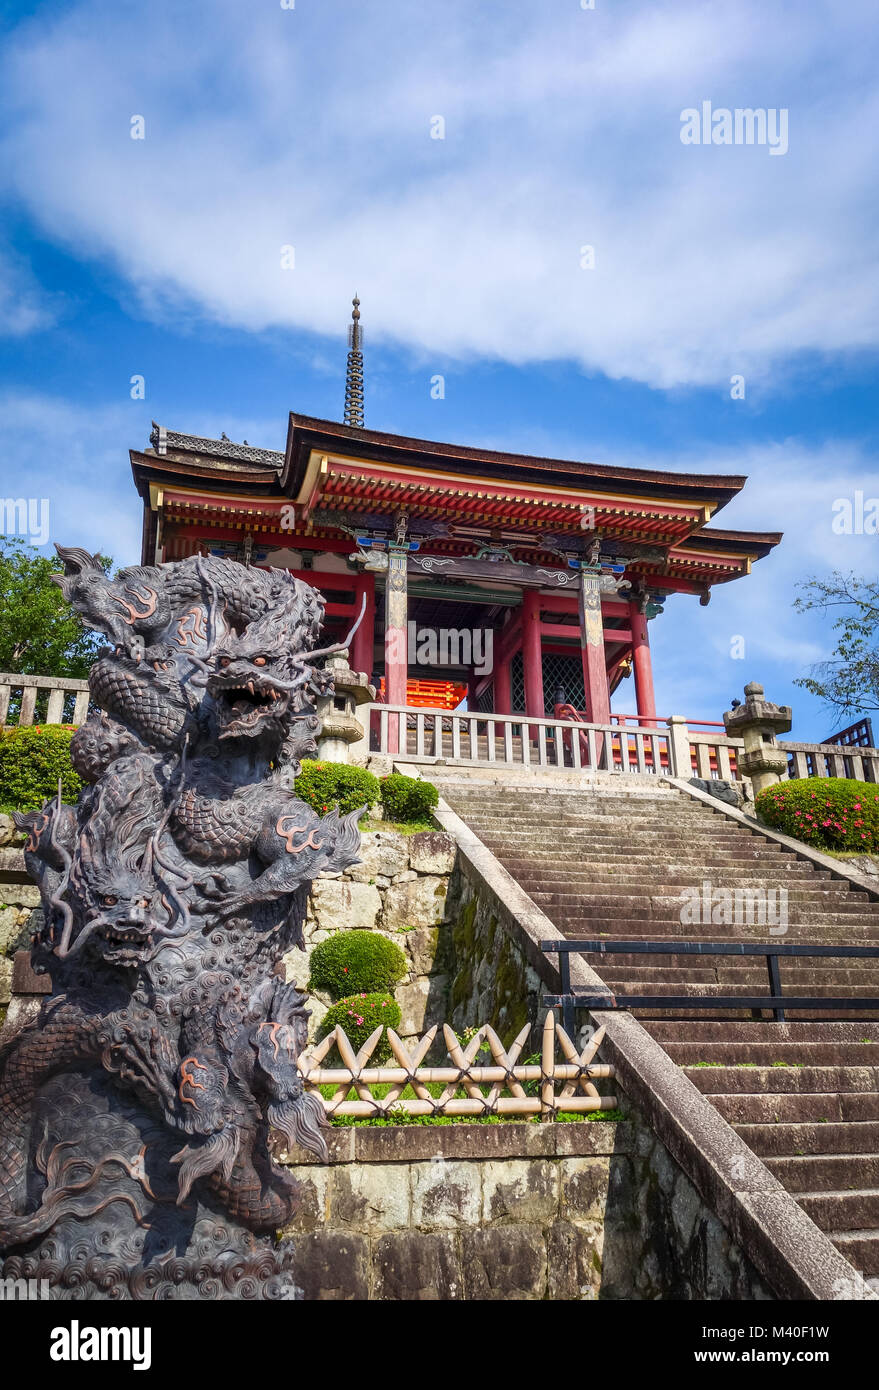 Dragon statue in front of the kiyomizu-dera temple gate, Kyoto, Japan Stock Photo